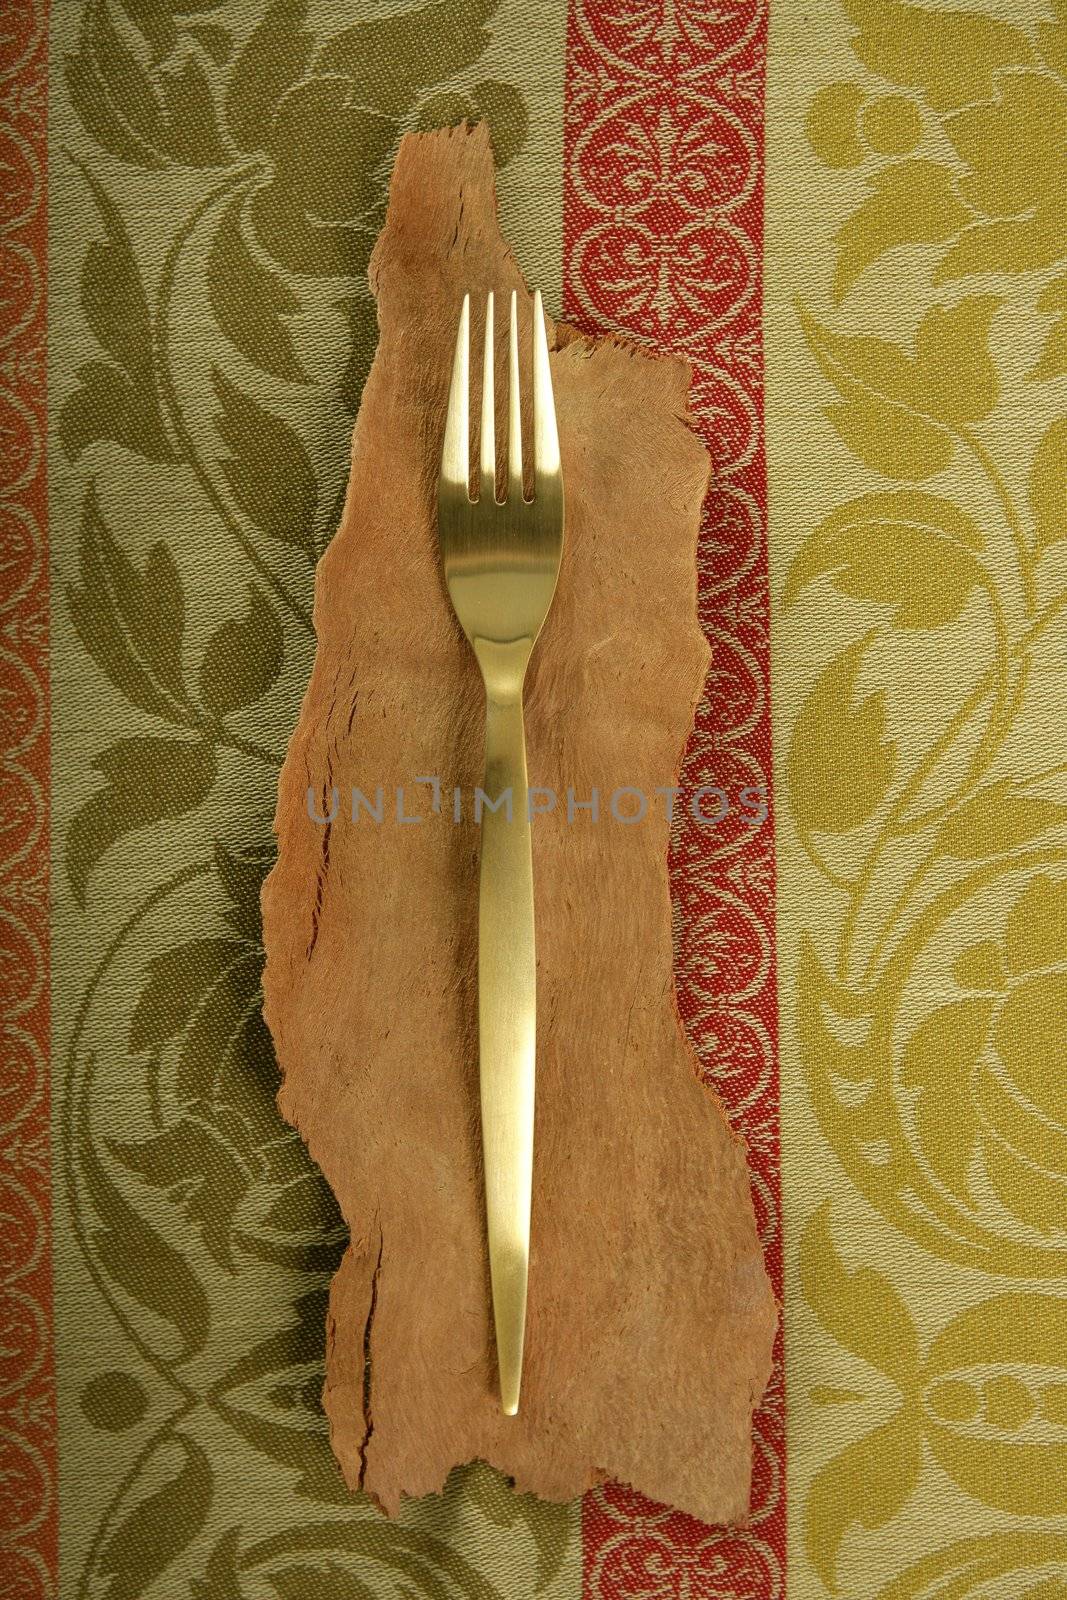 Golden fork by lunamarina